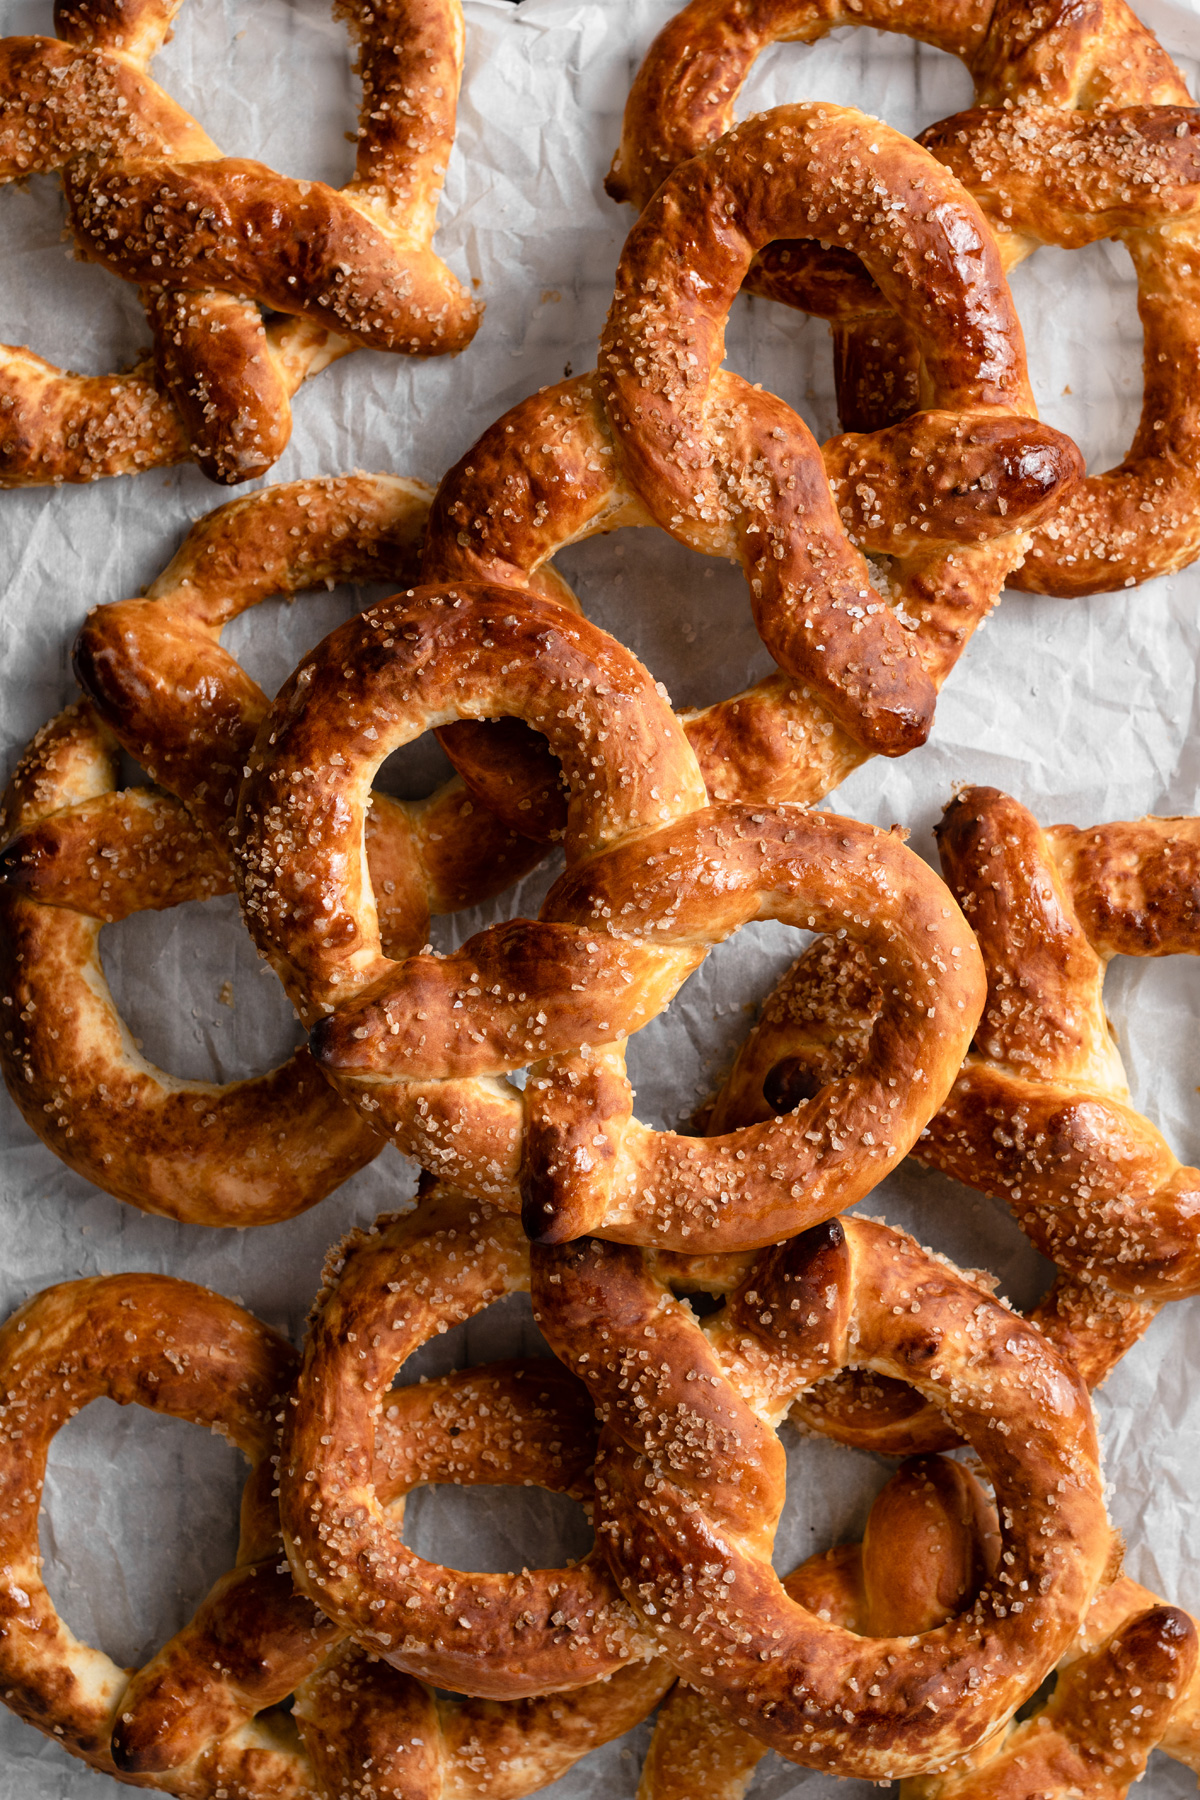 Image of a pile of soft pretzels.